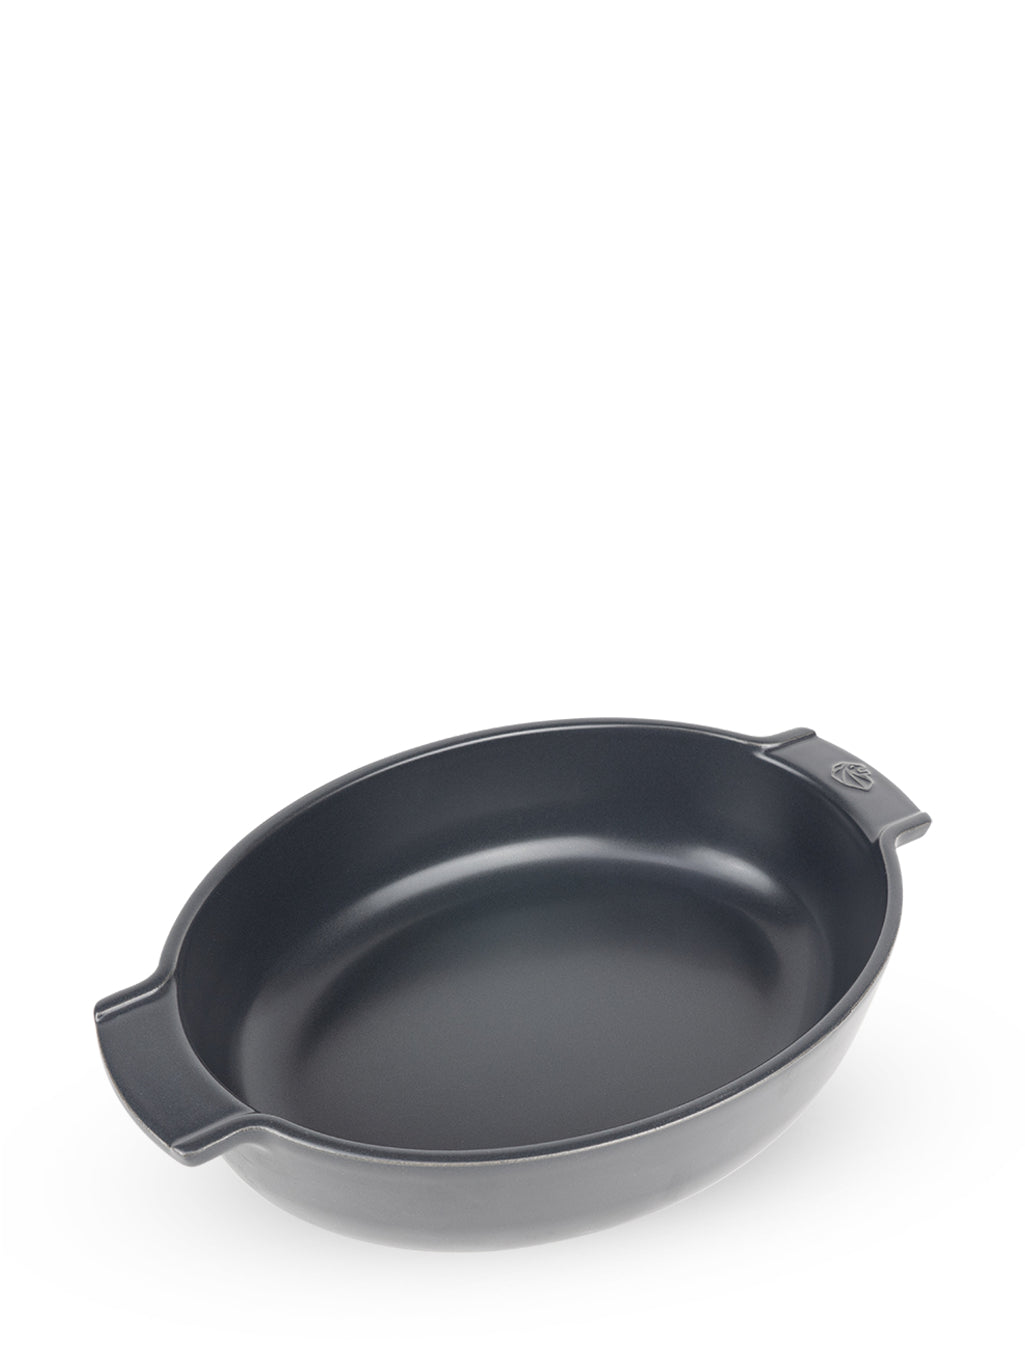 Peugeot Appolia Ceramic Oval Baking Dish 31cm